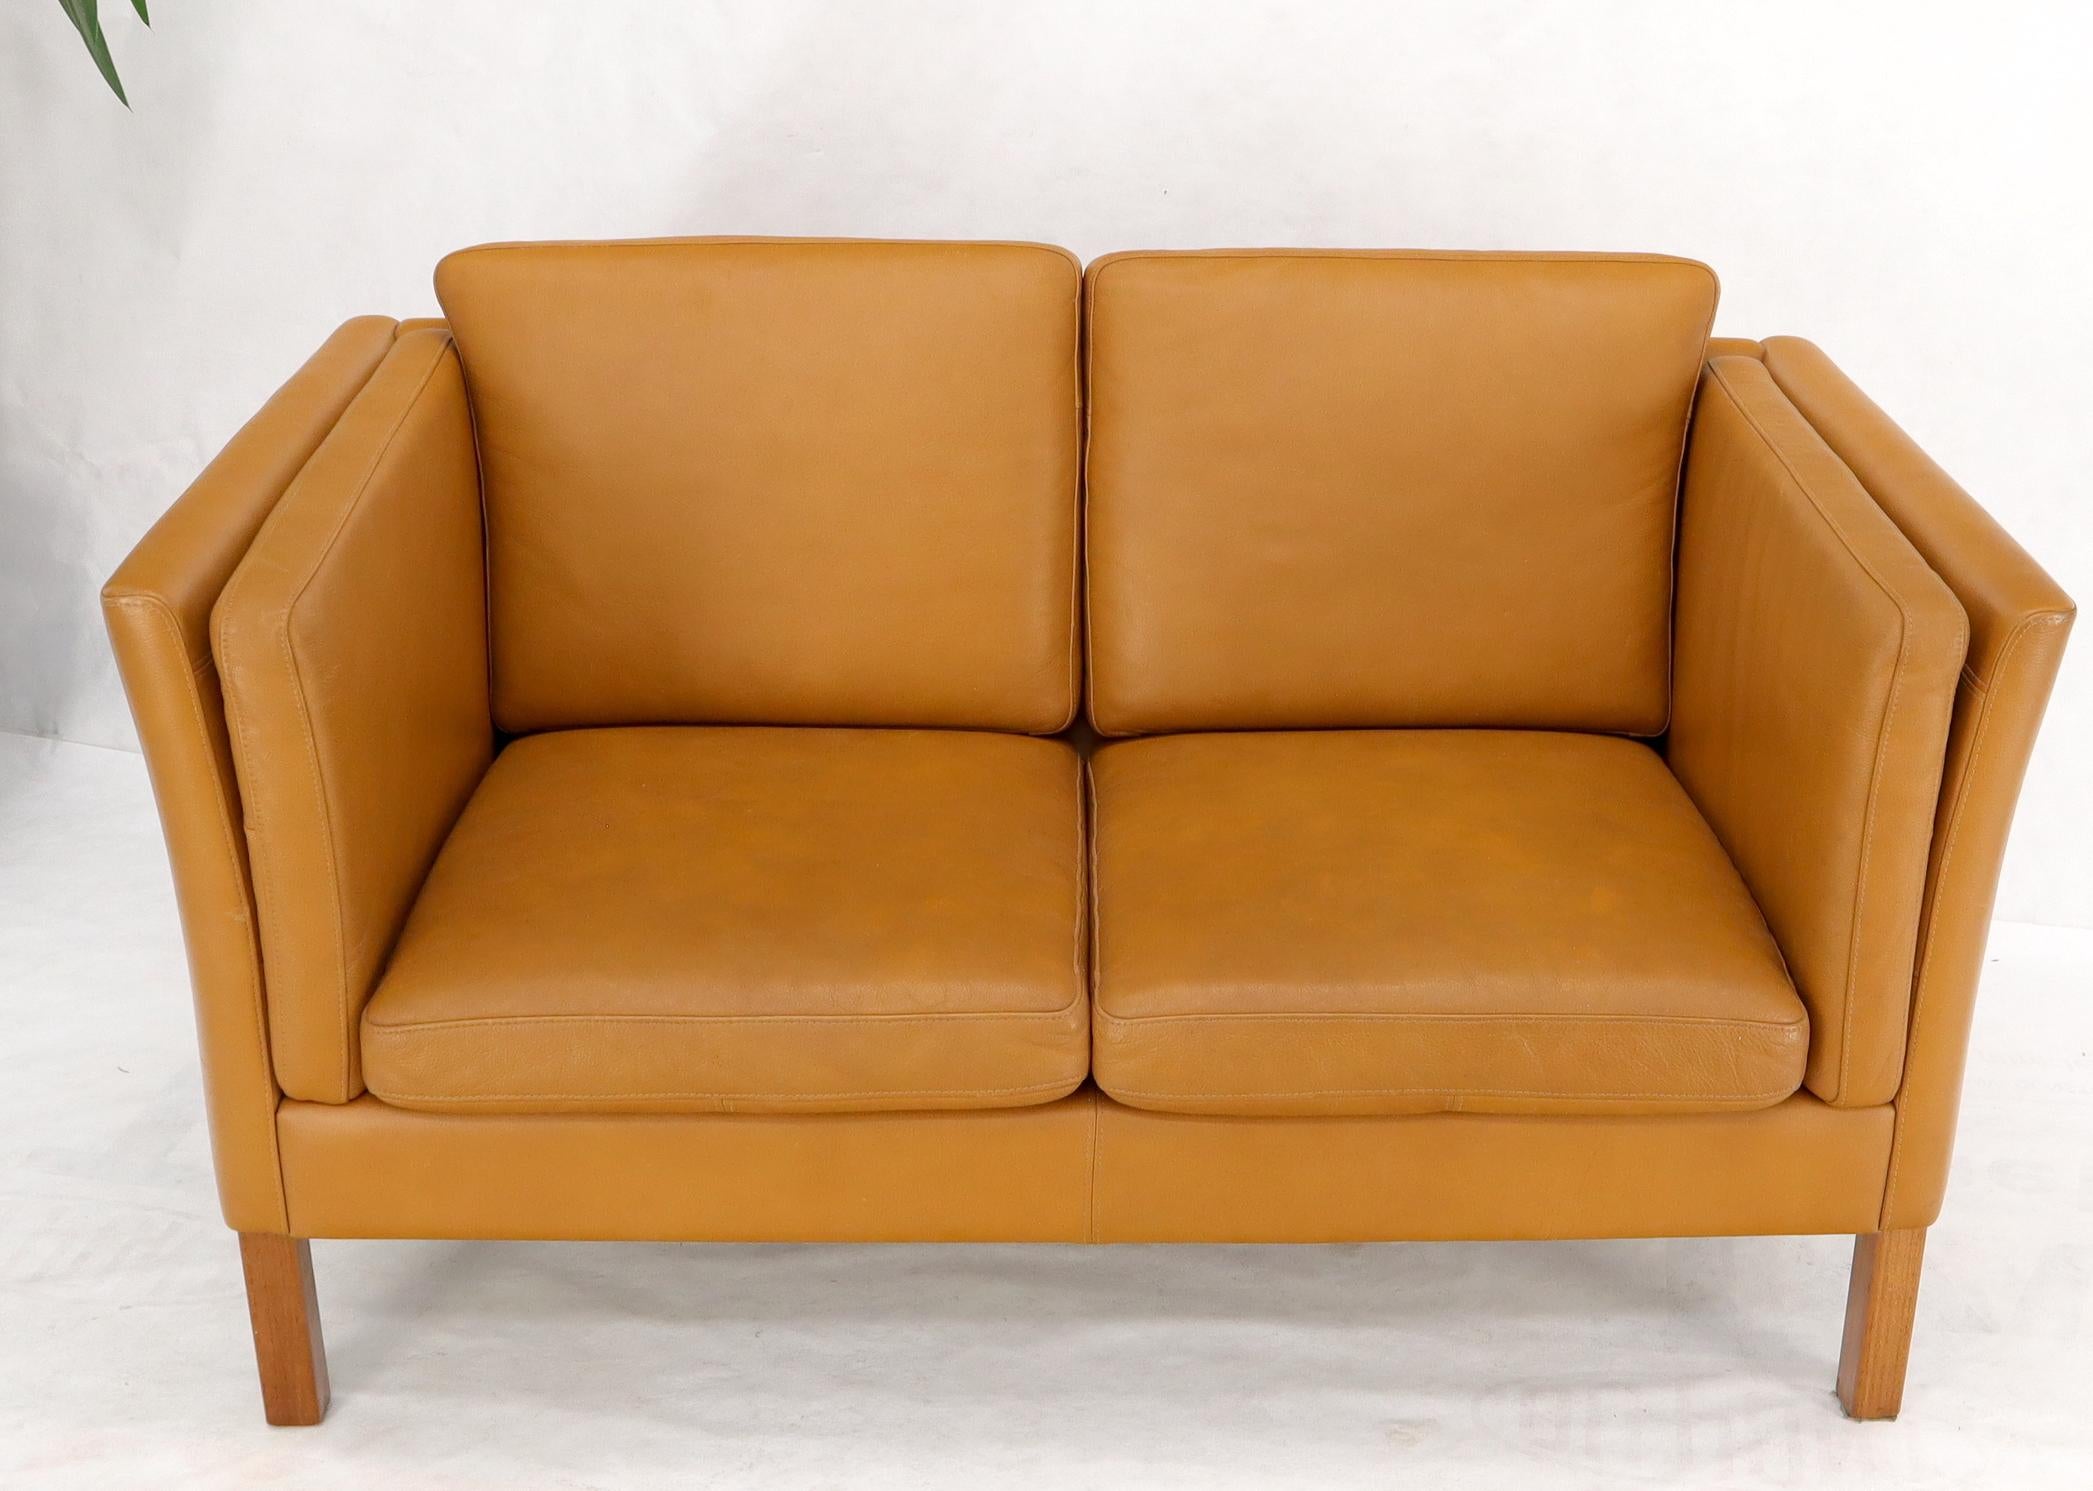 Borge Mogenson Tan Leather Loveseat Sofa Danish Mid-Century Modern For Sale 2